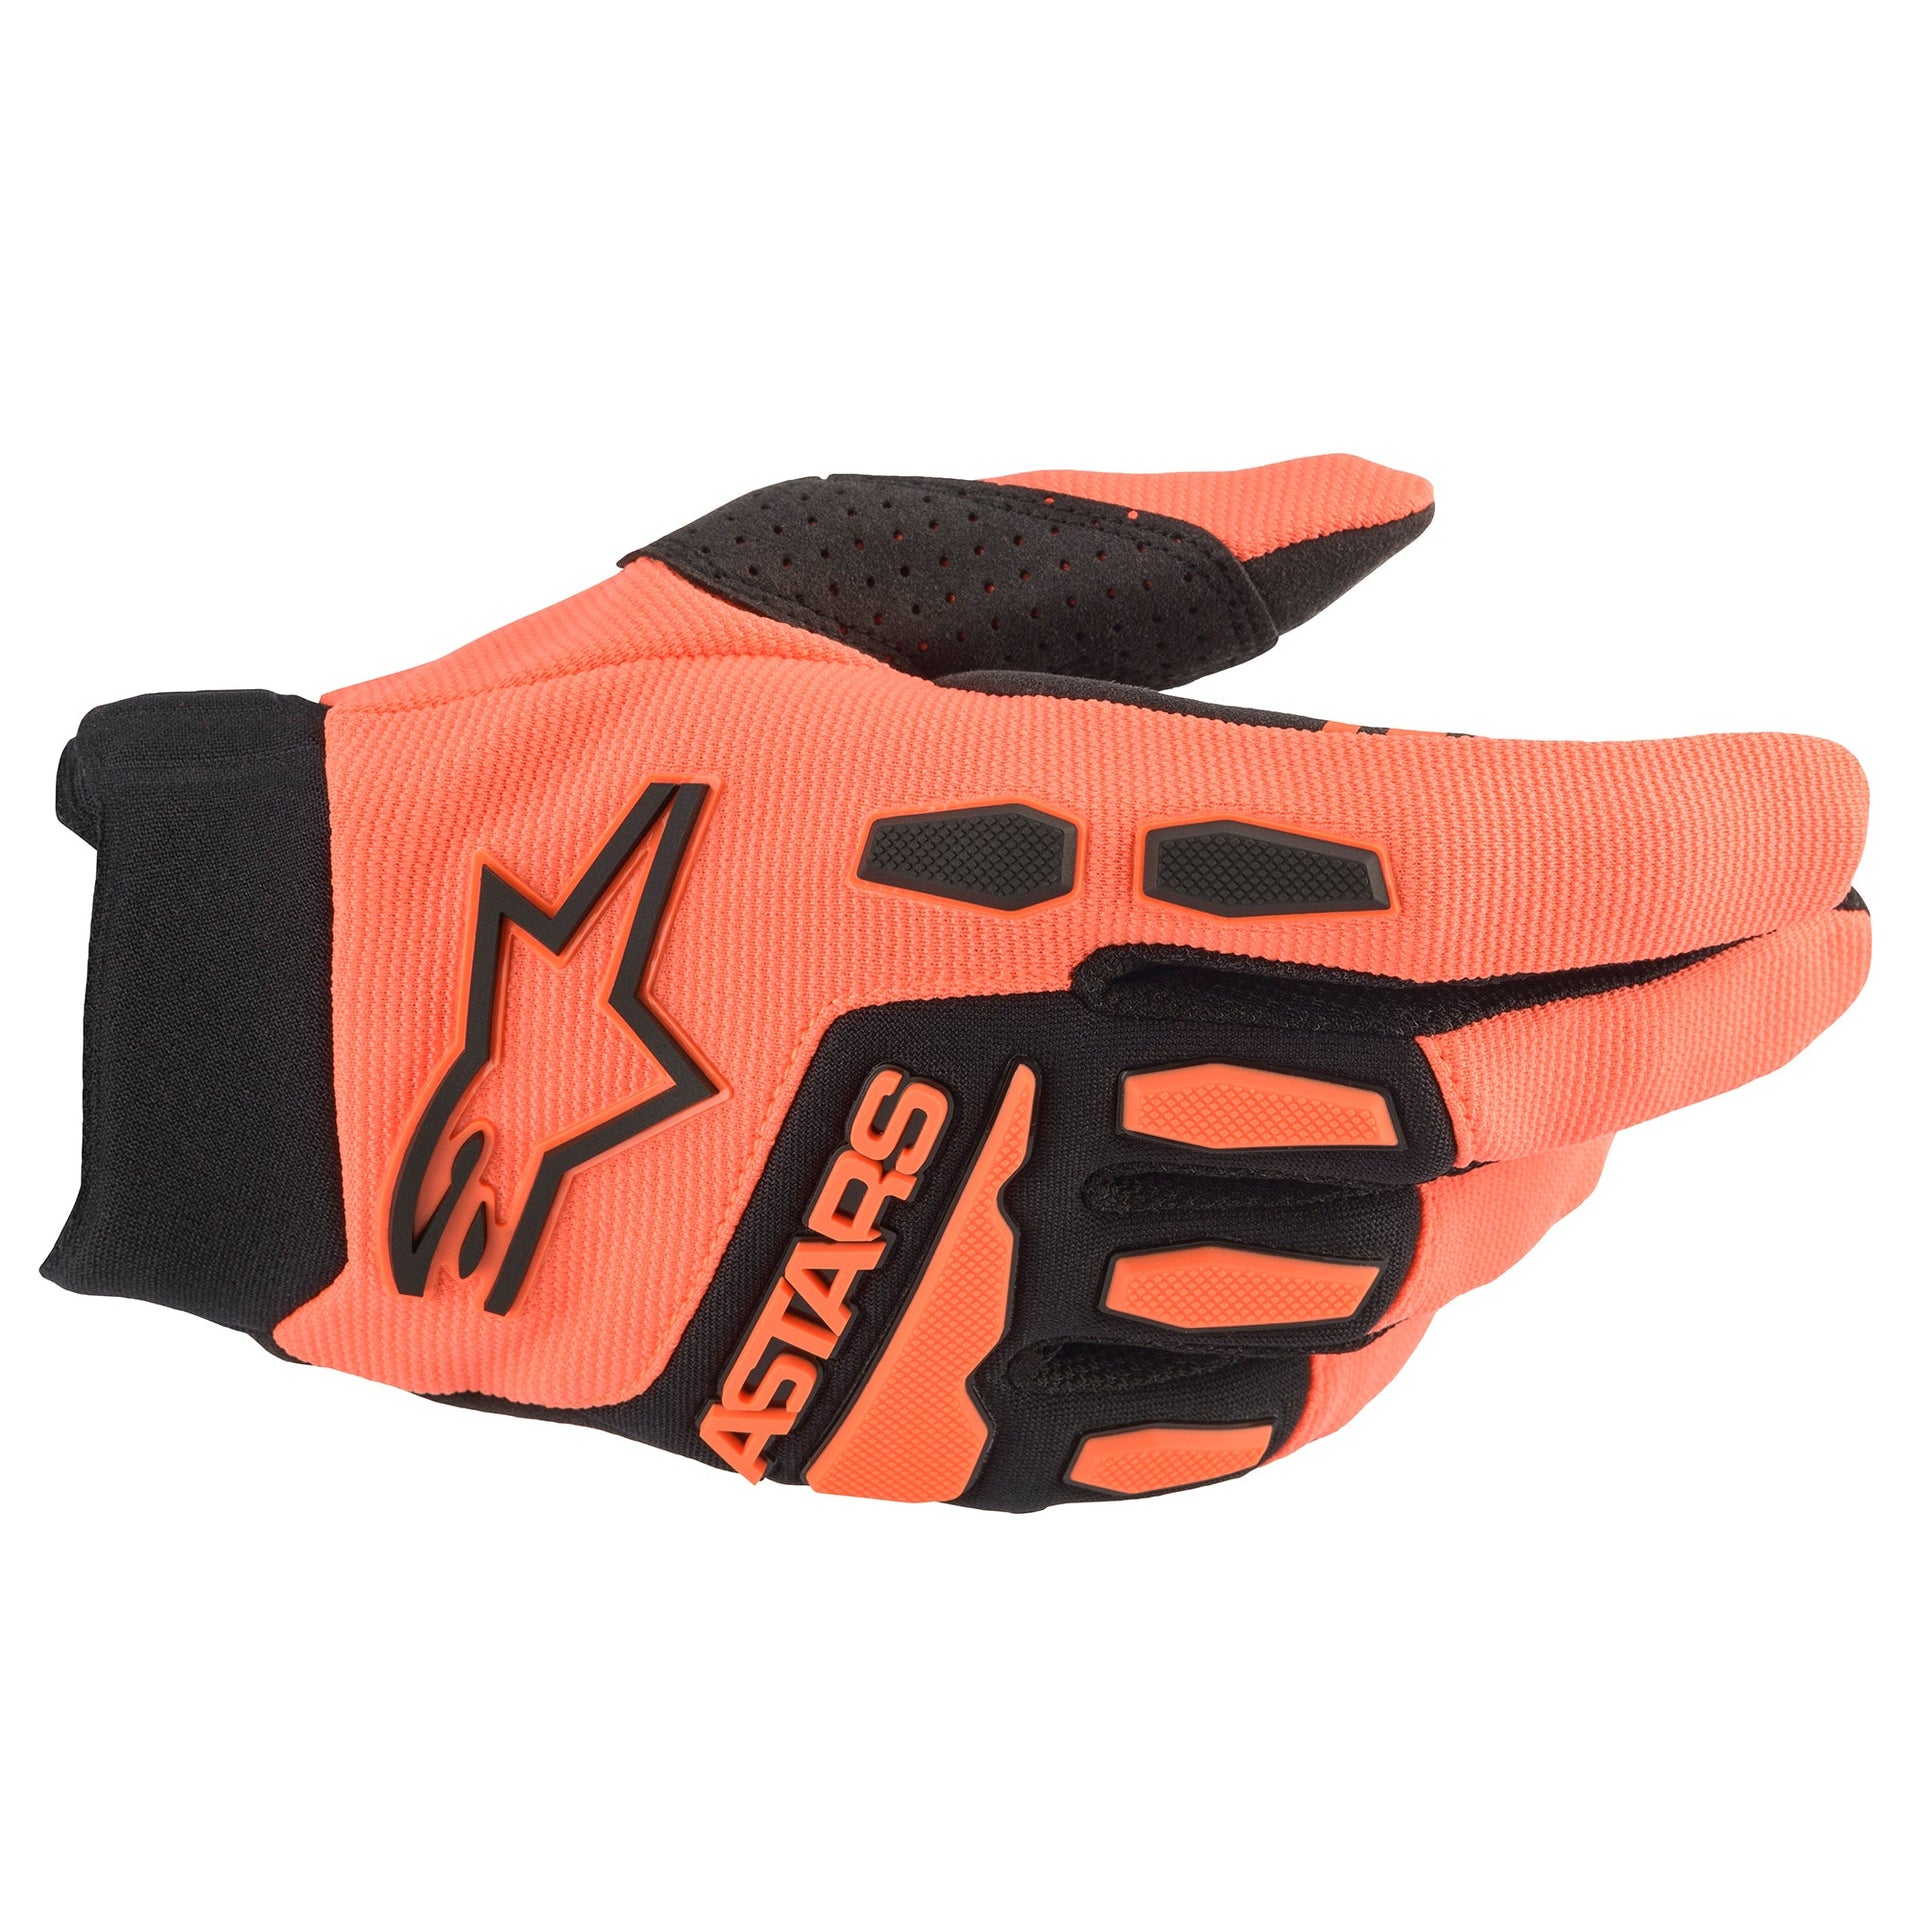 Alpinestars - Full Bore Gloves